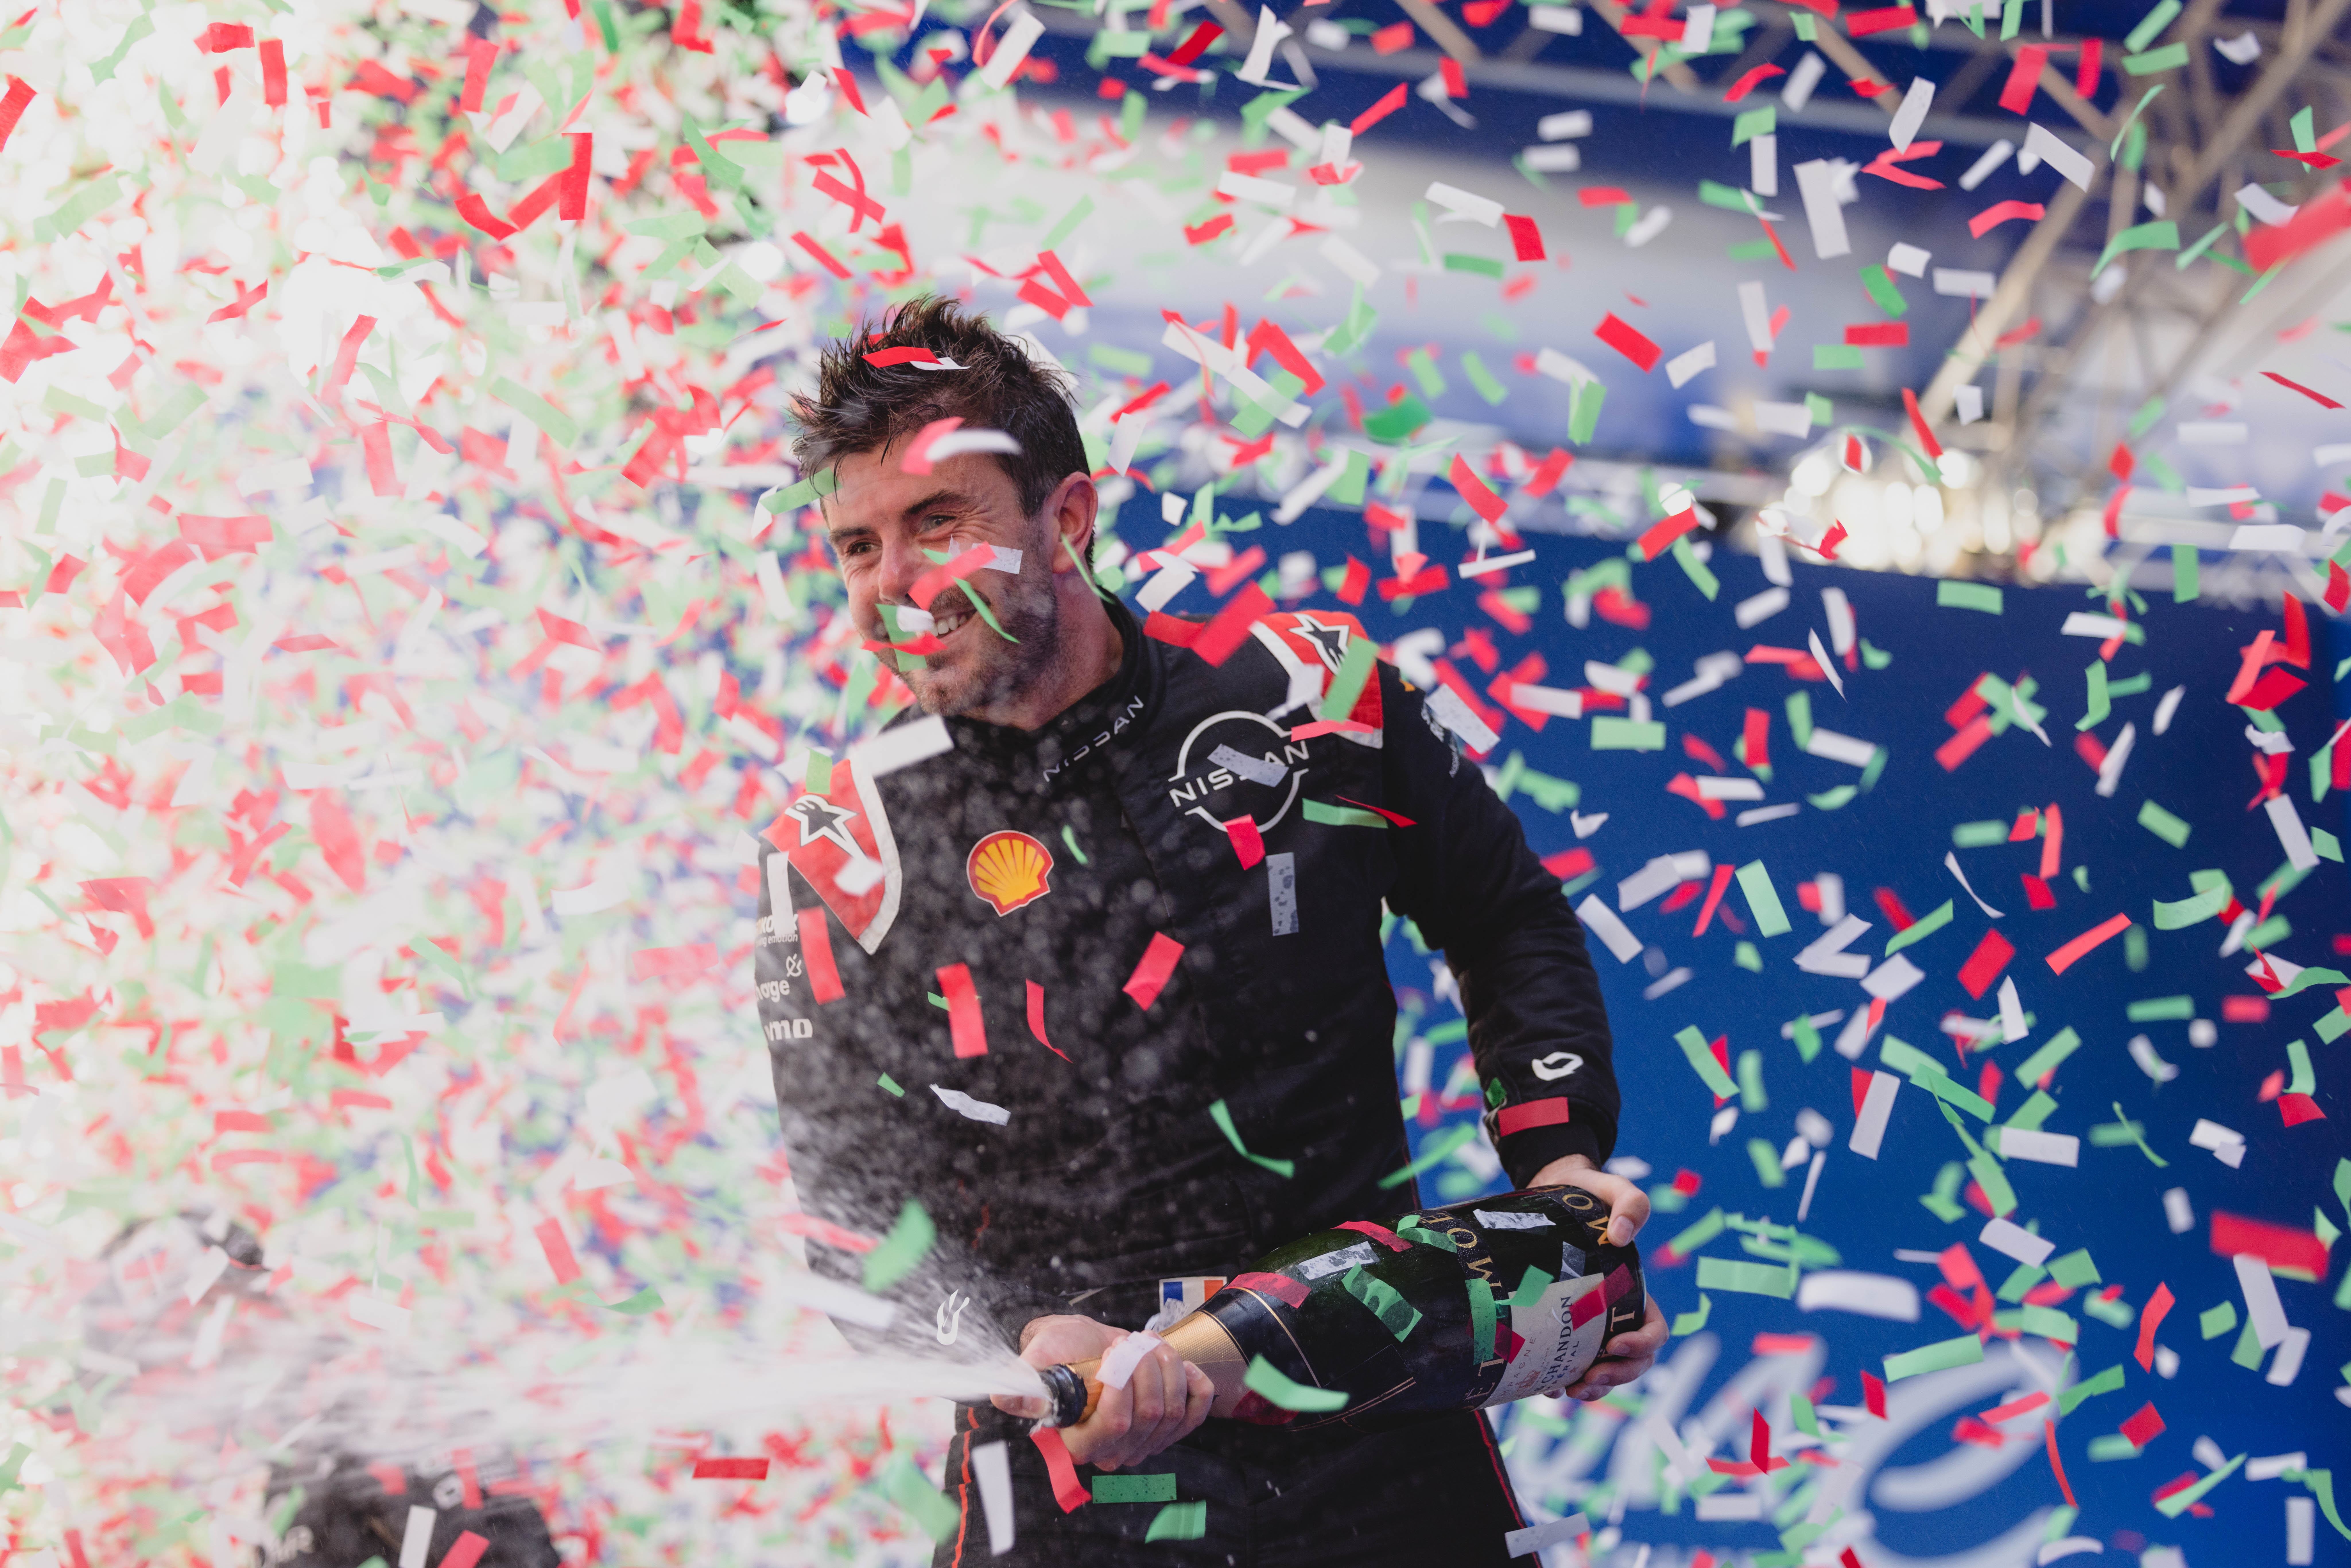 Formula e racer celebrating